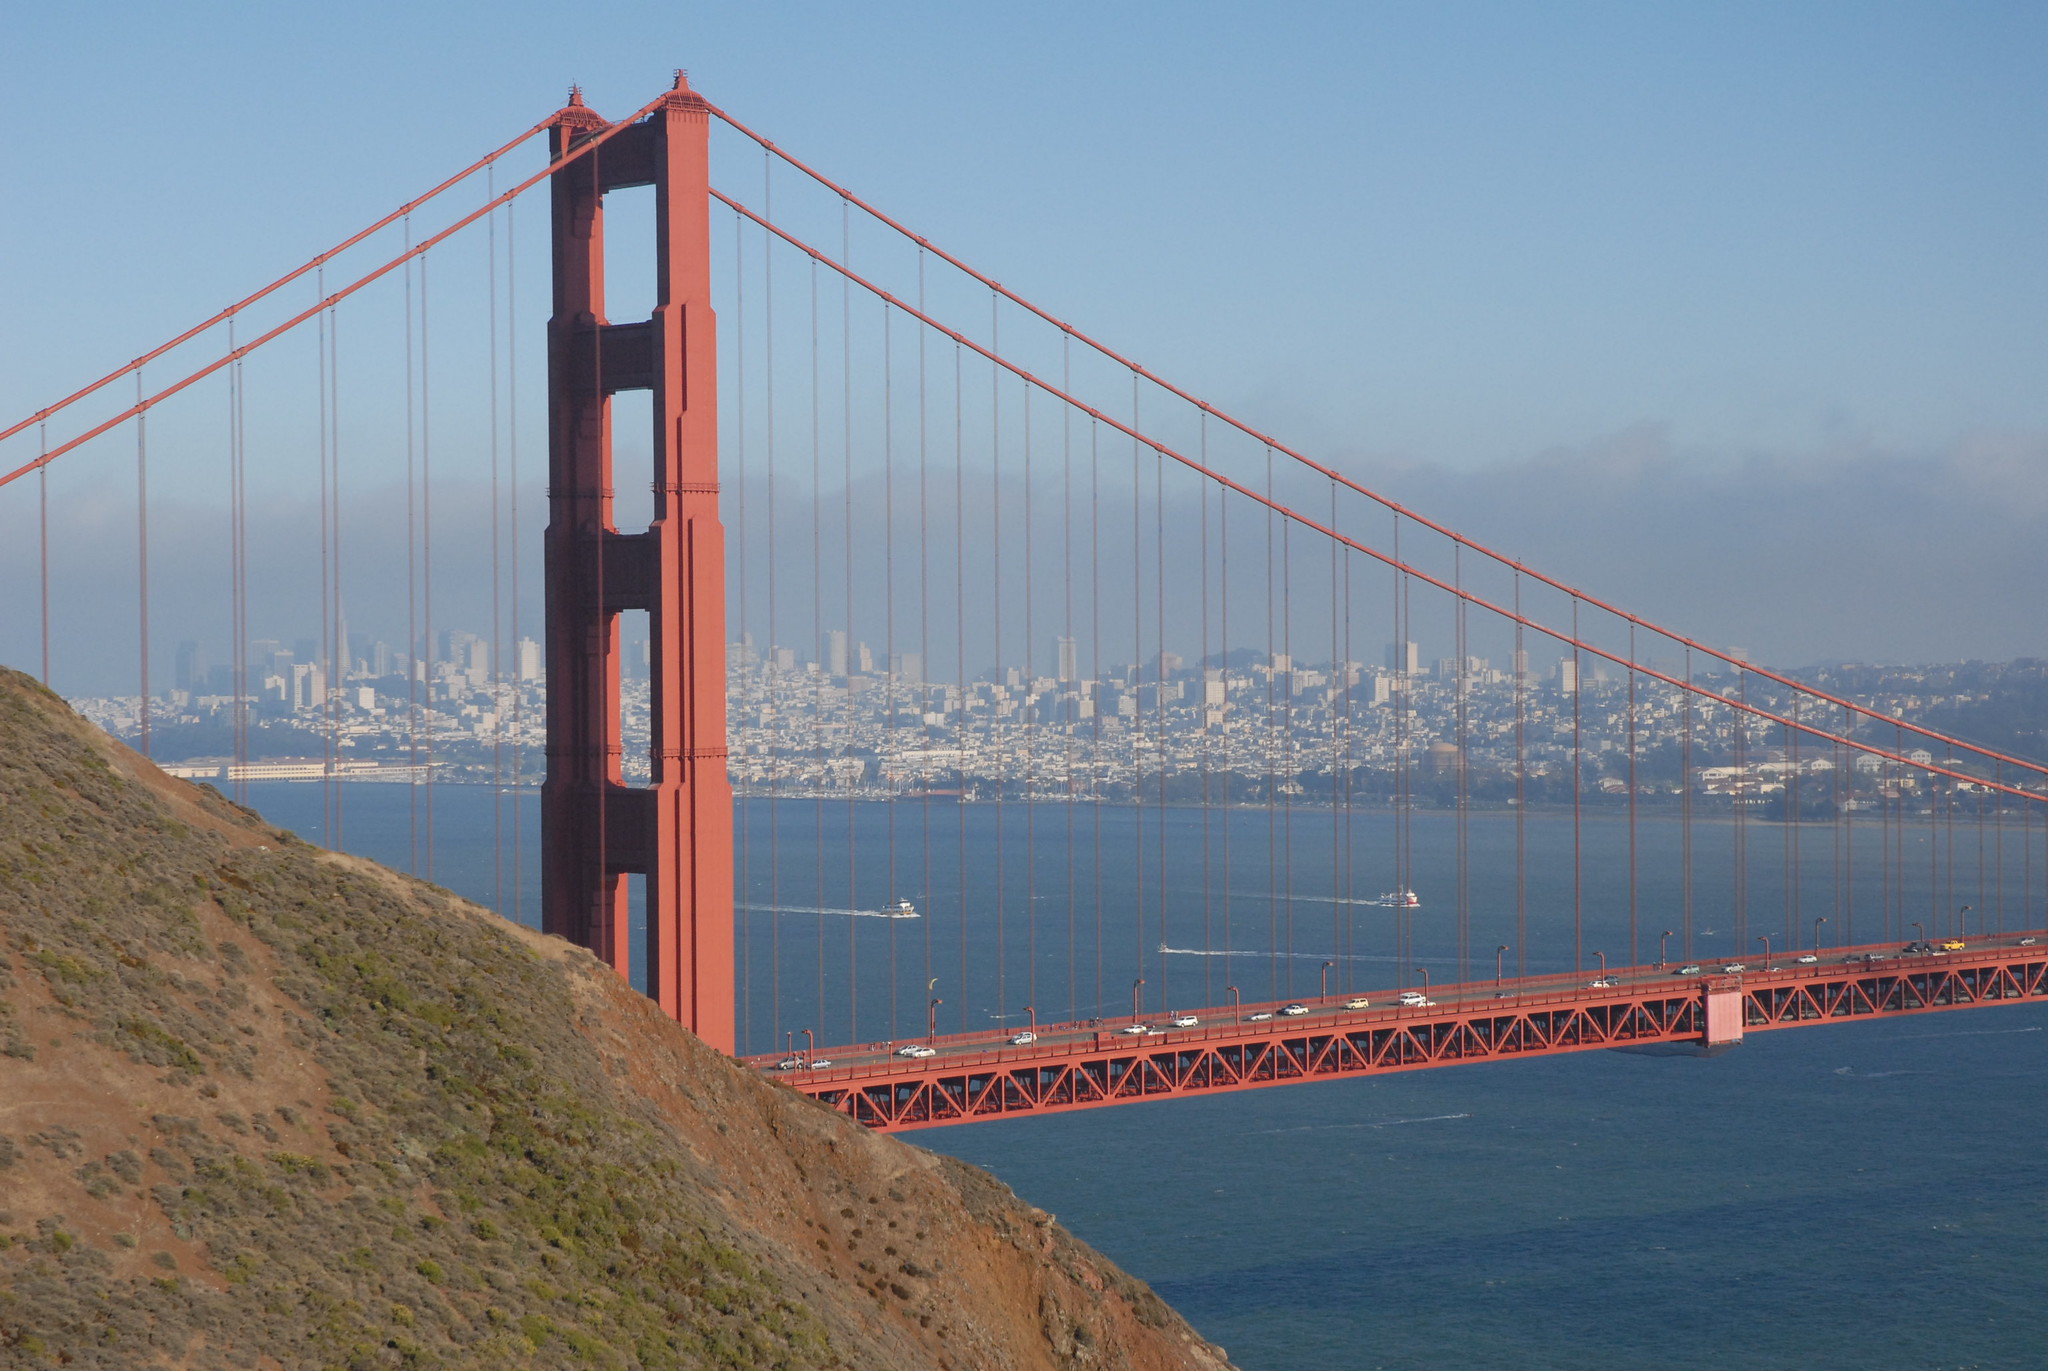 The view of San Francisco through the Golden Gate Bridge